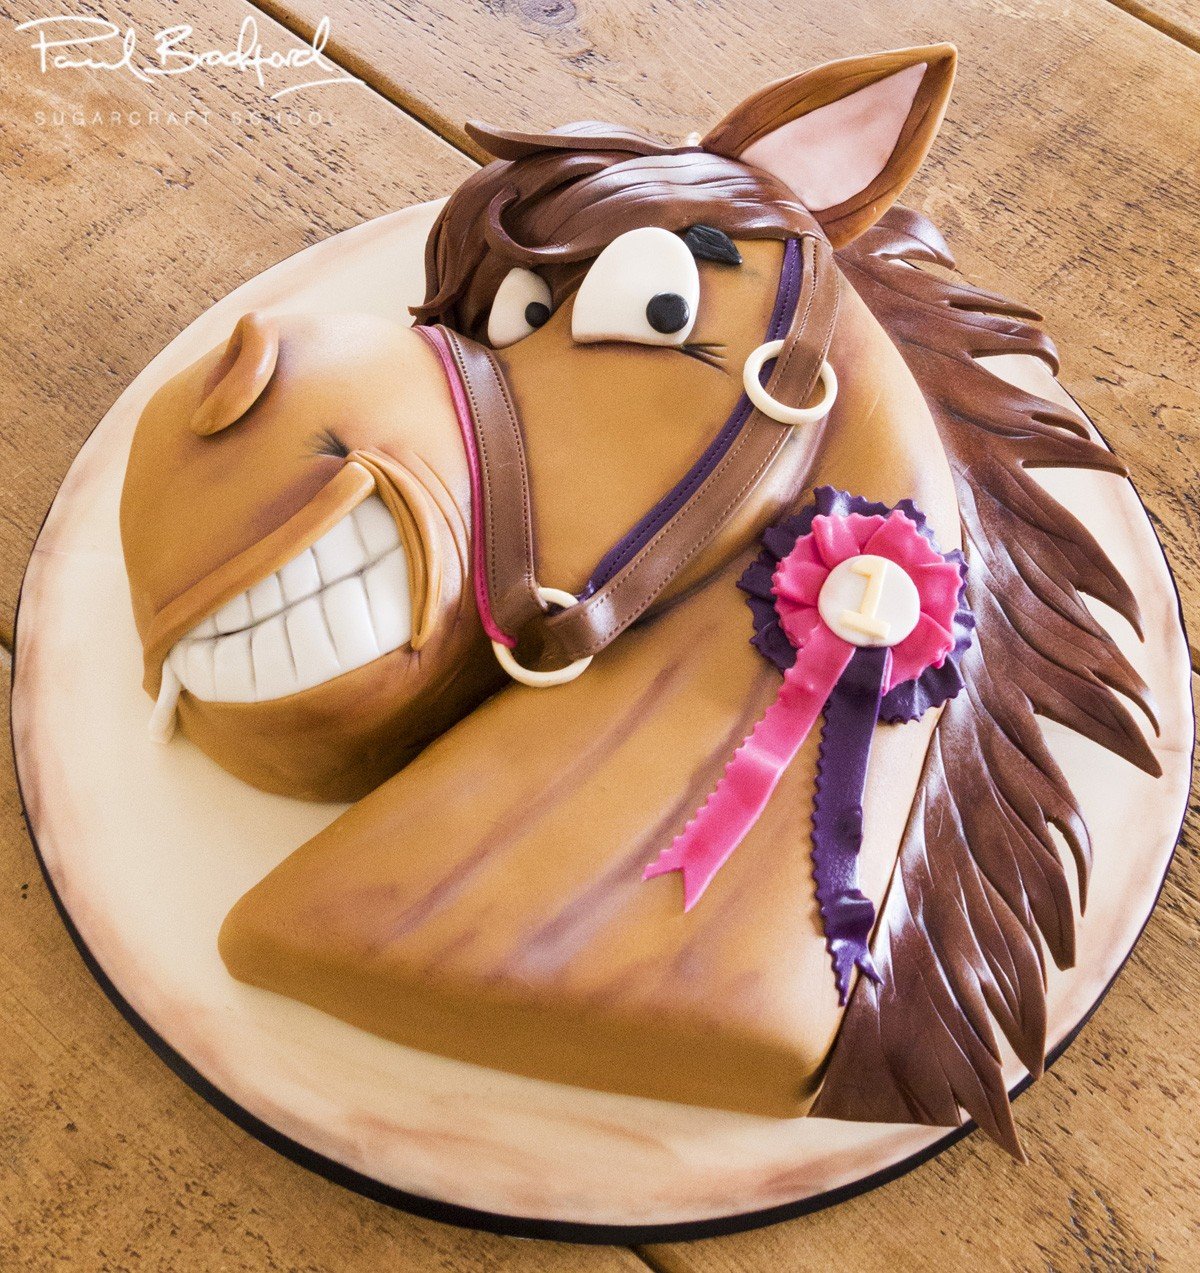 Horse Rider Cake #2